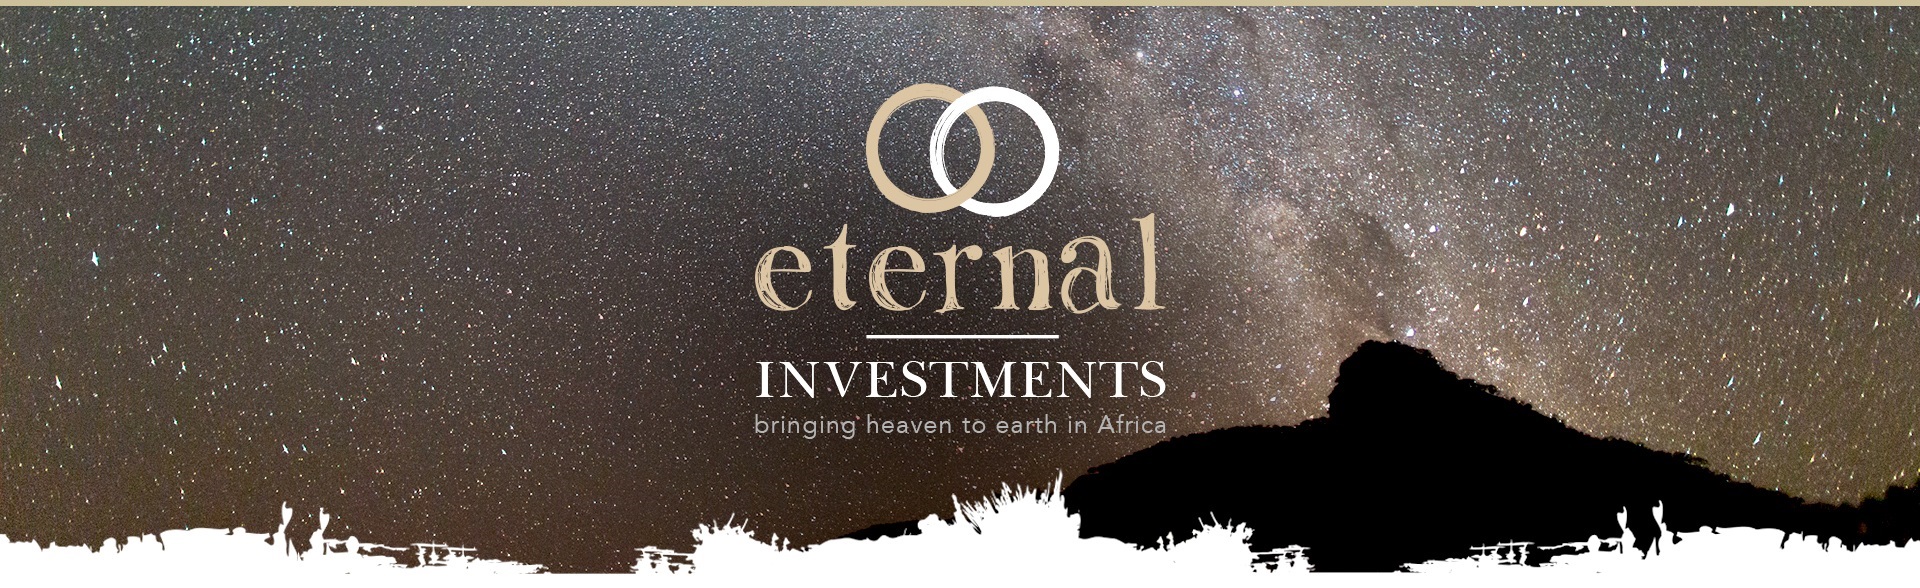 eternal investments-news banner